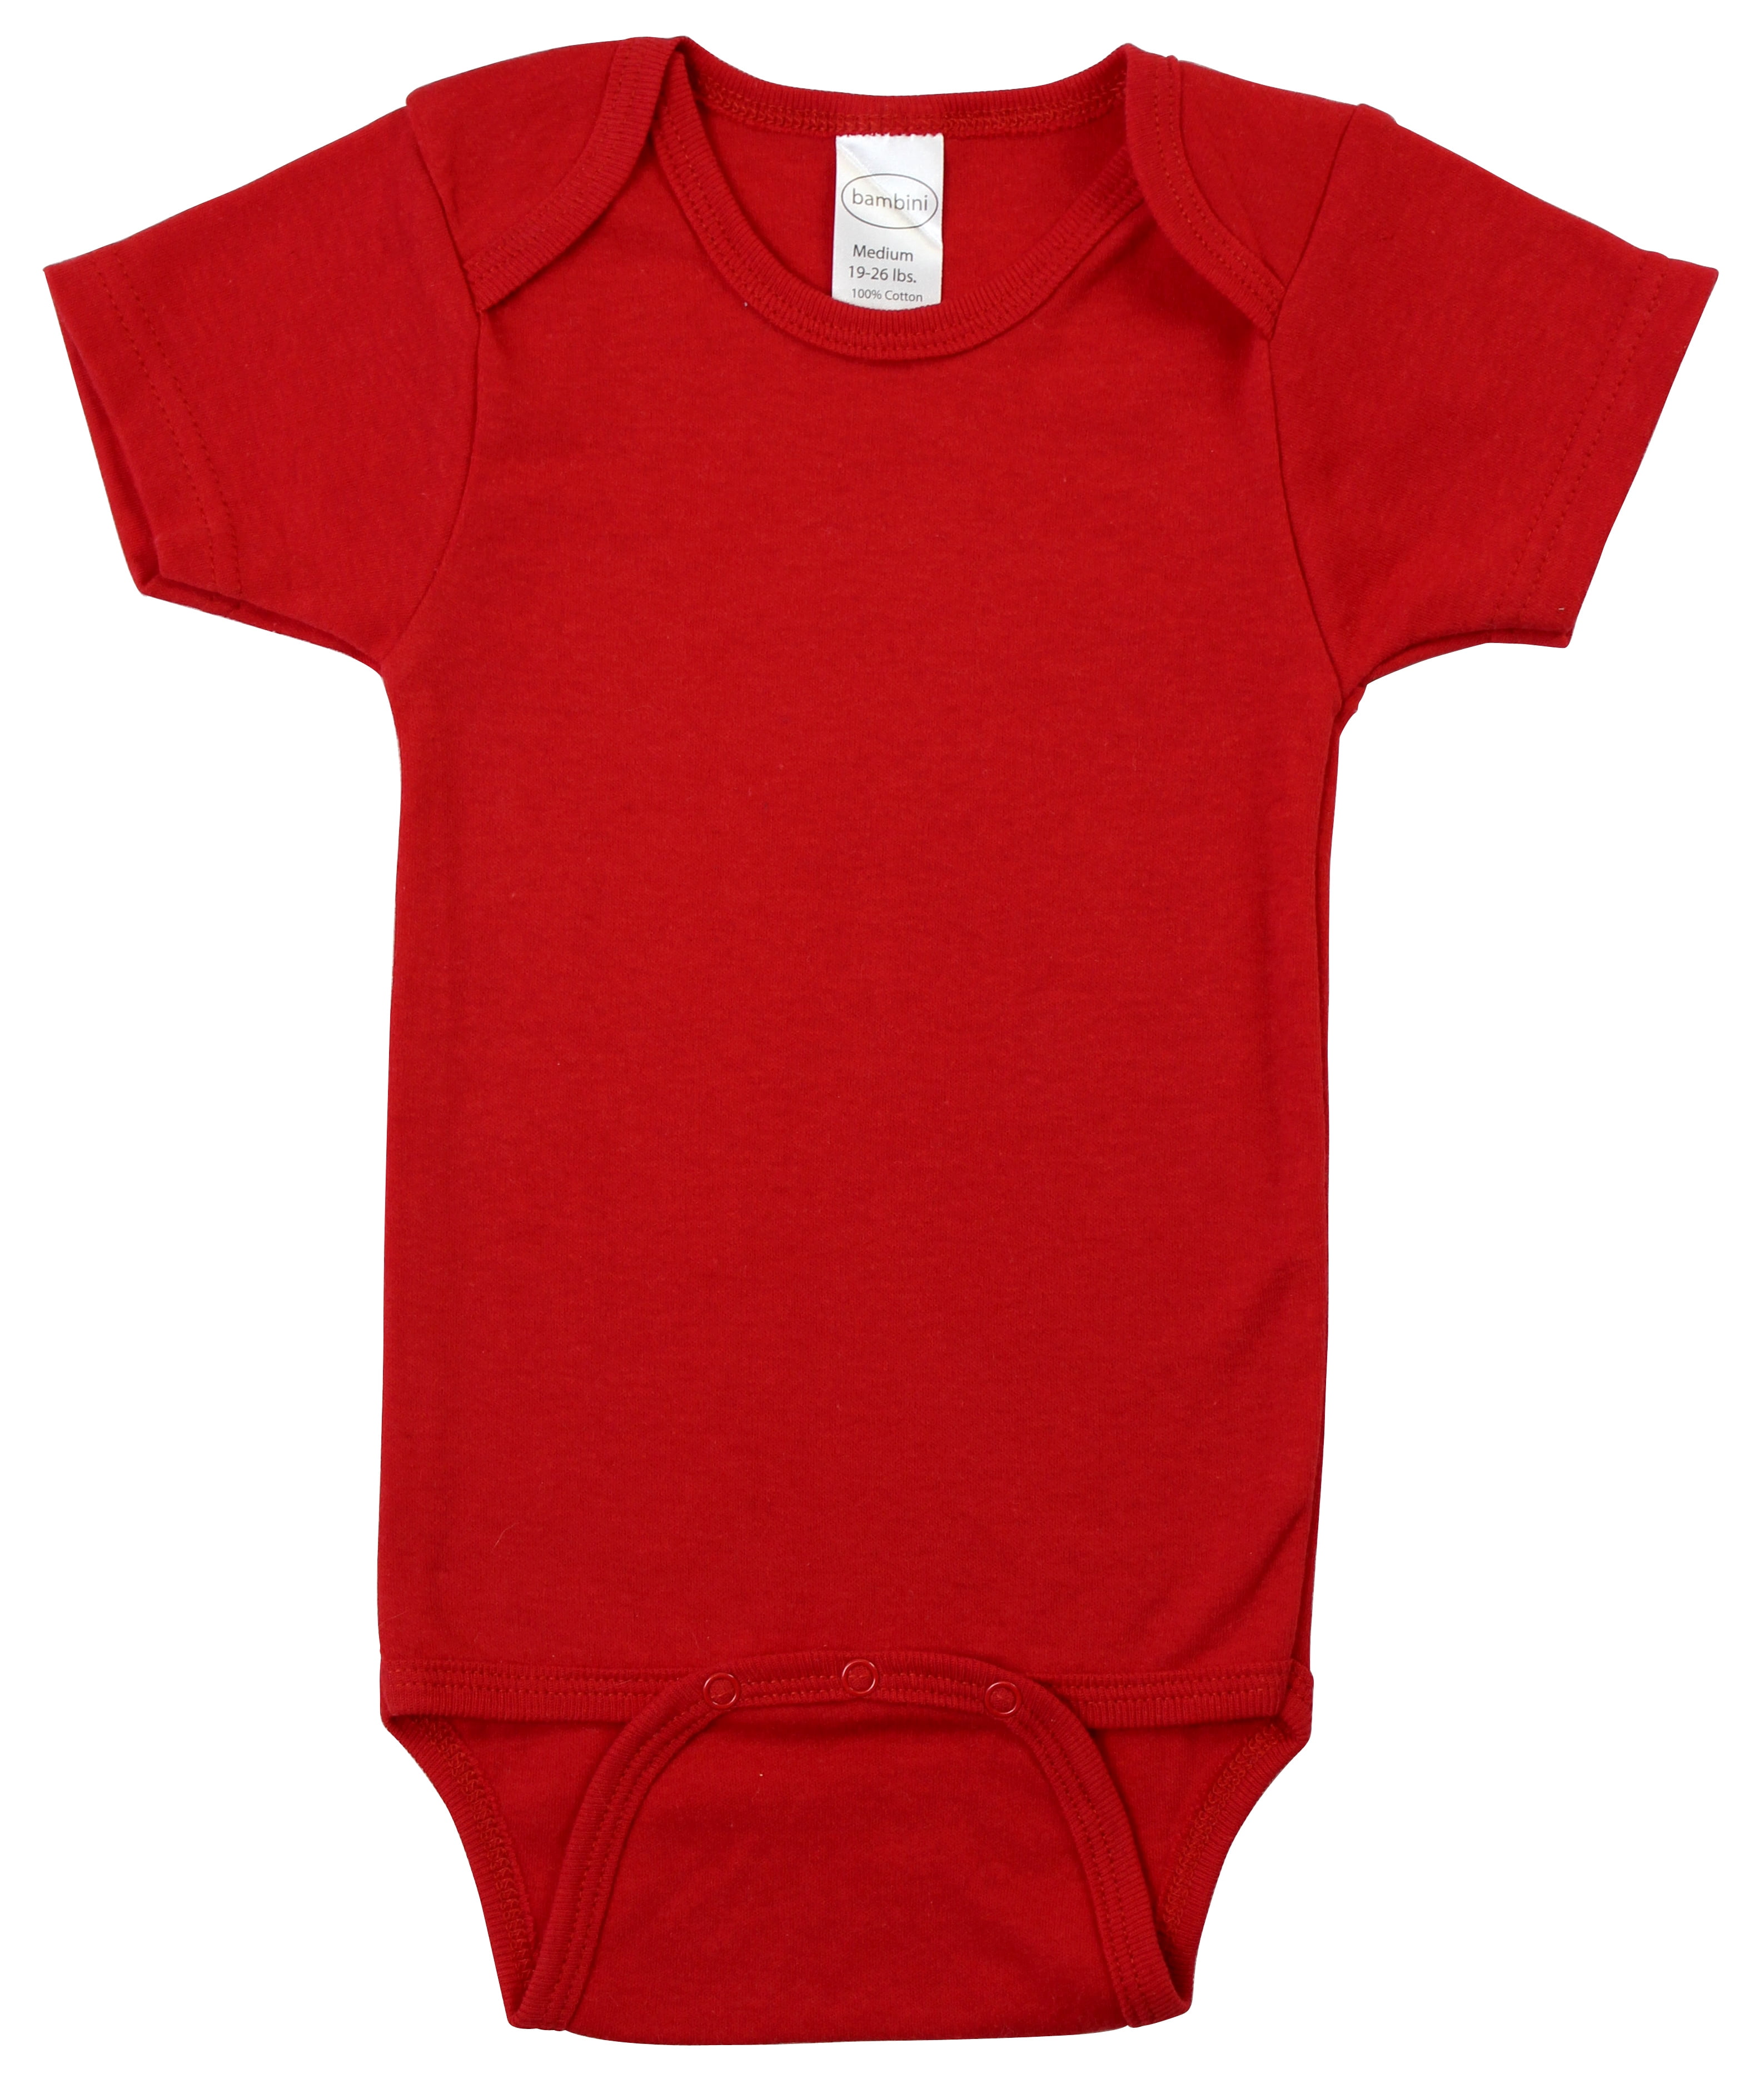 Ls-0148 Interlock Short Sleeve Bodysuit, Red - Large